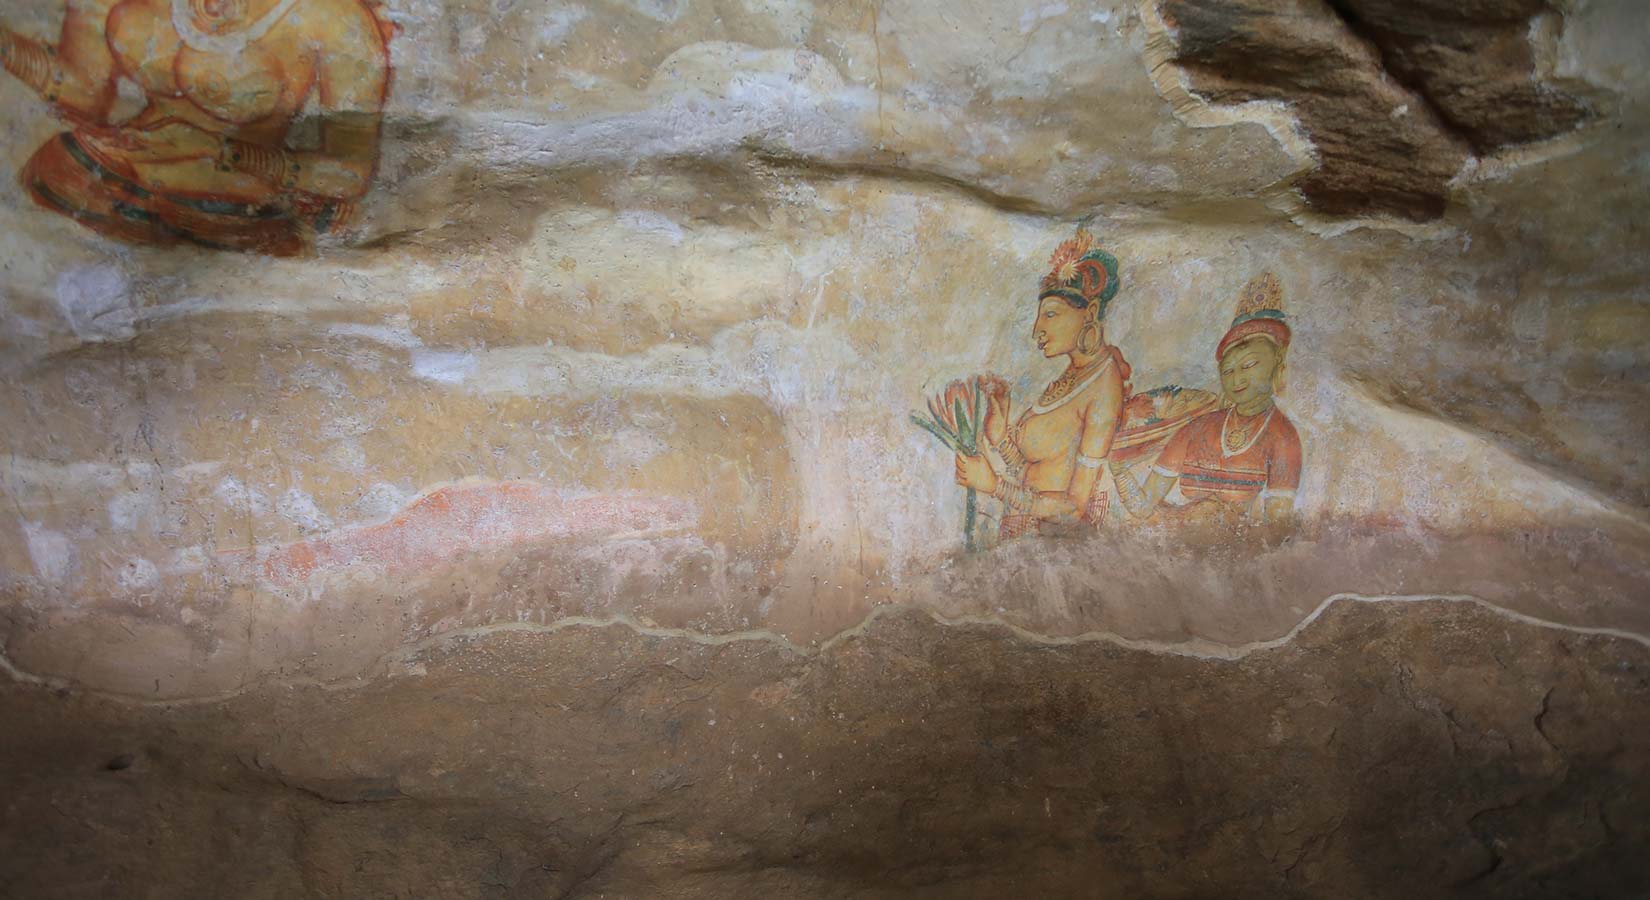 https://www.steuartholidays.com/zh/wp-content/uploads/sites/20/2019/03/Frescoes-in-Sigiriya-Rock-Fortress-1.jpg